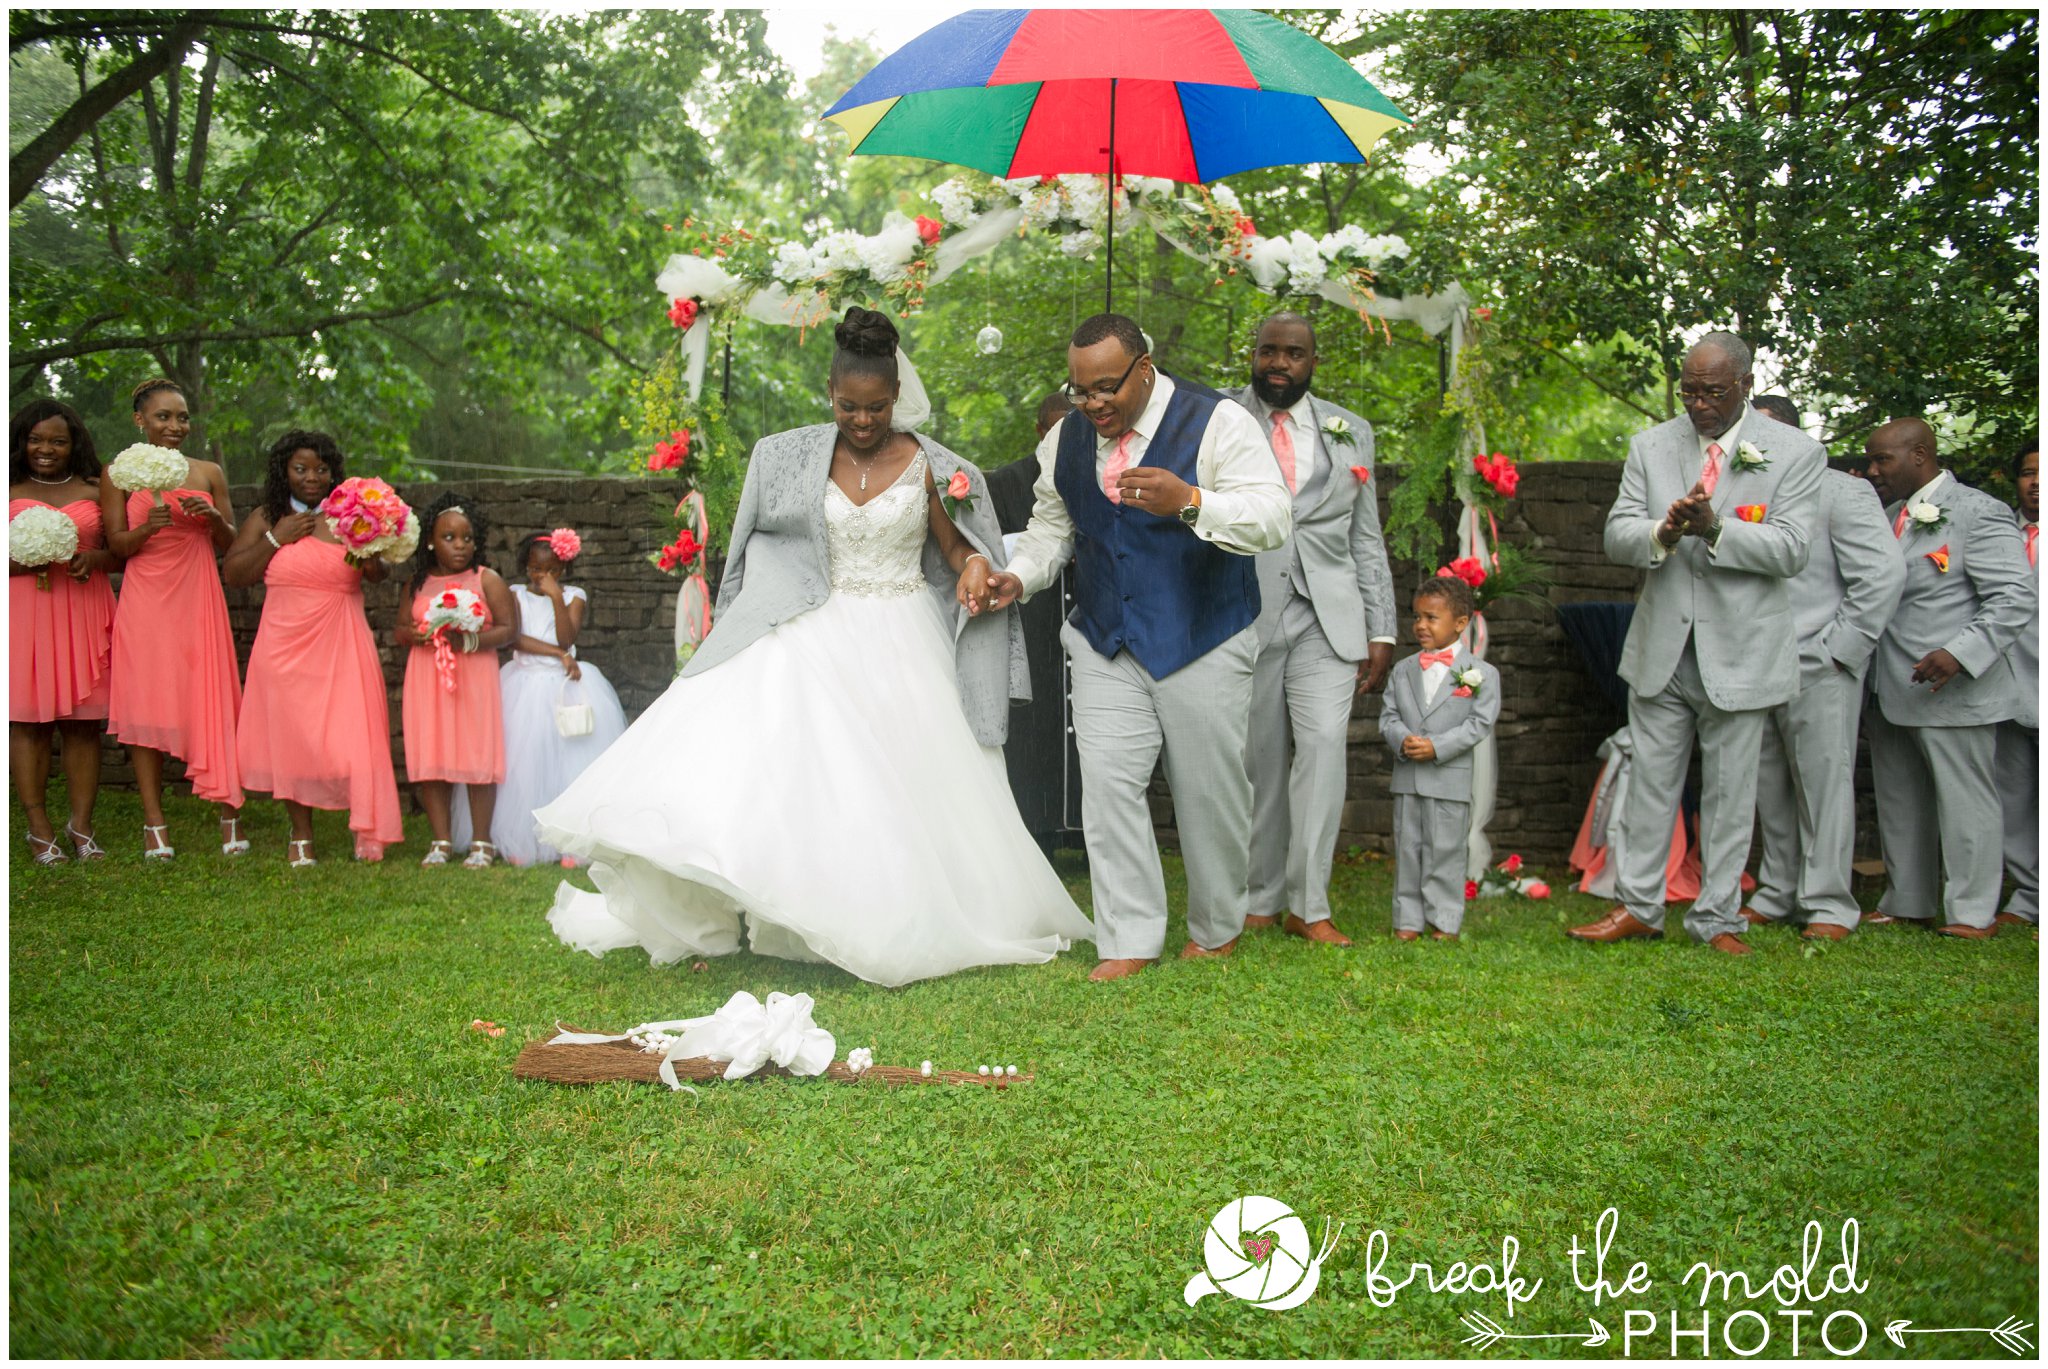 break-the-mold-photo-june-wedding-garden-rain-unique_8001.jpg